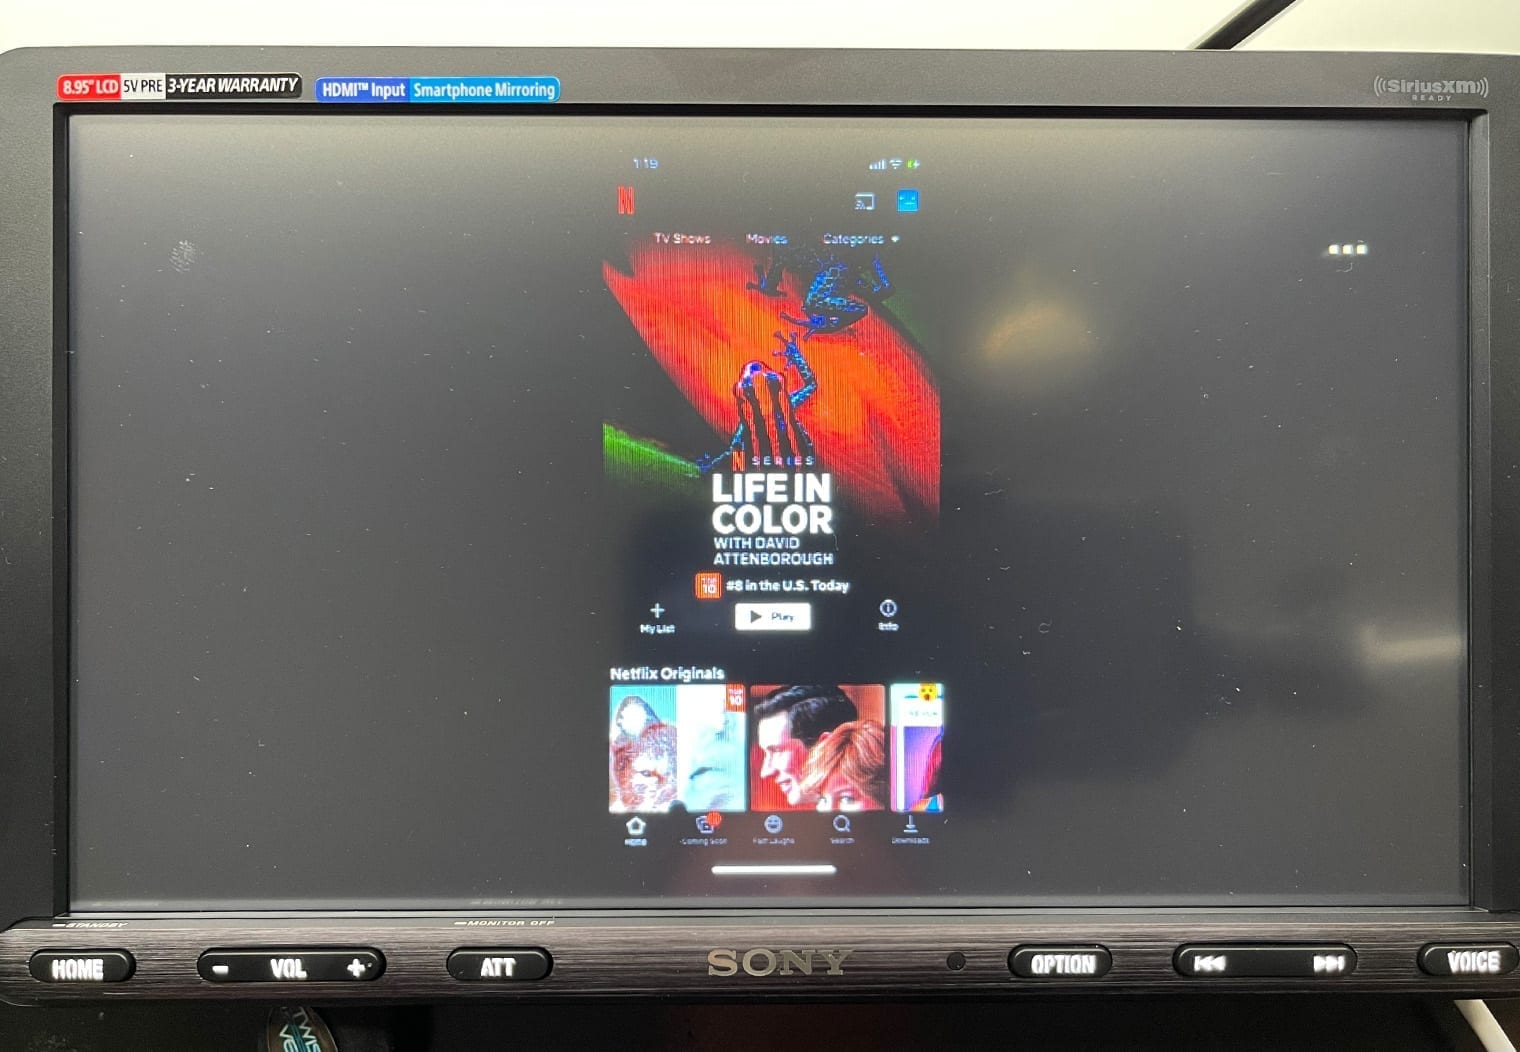 Sony XAV-AX8100 netflix homescreen on HDMI